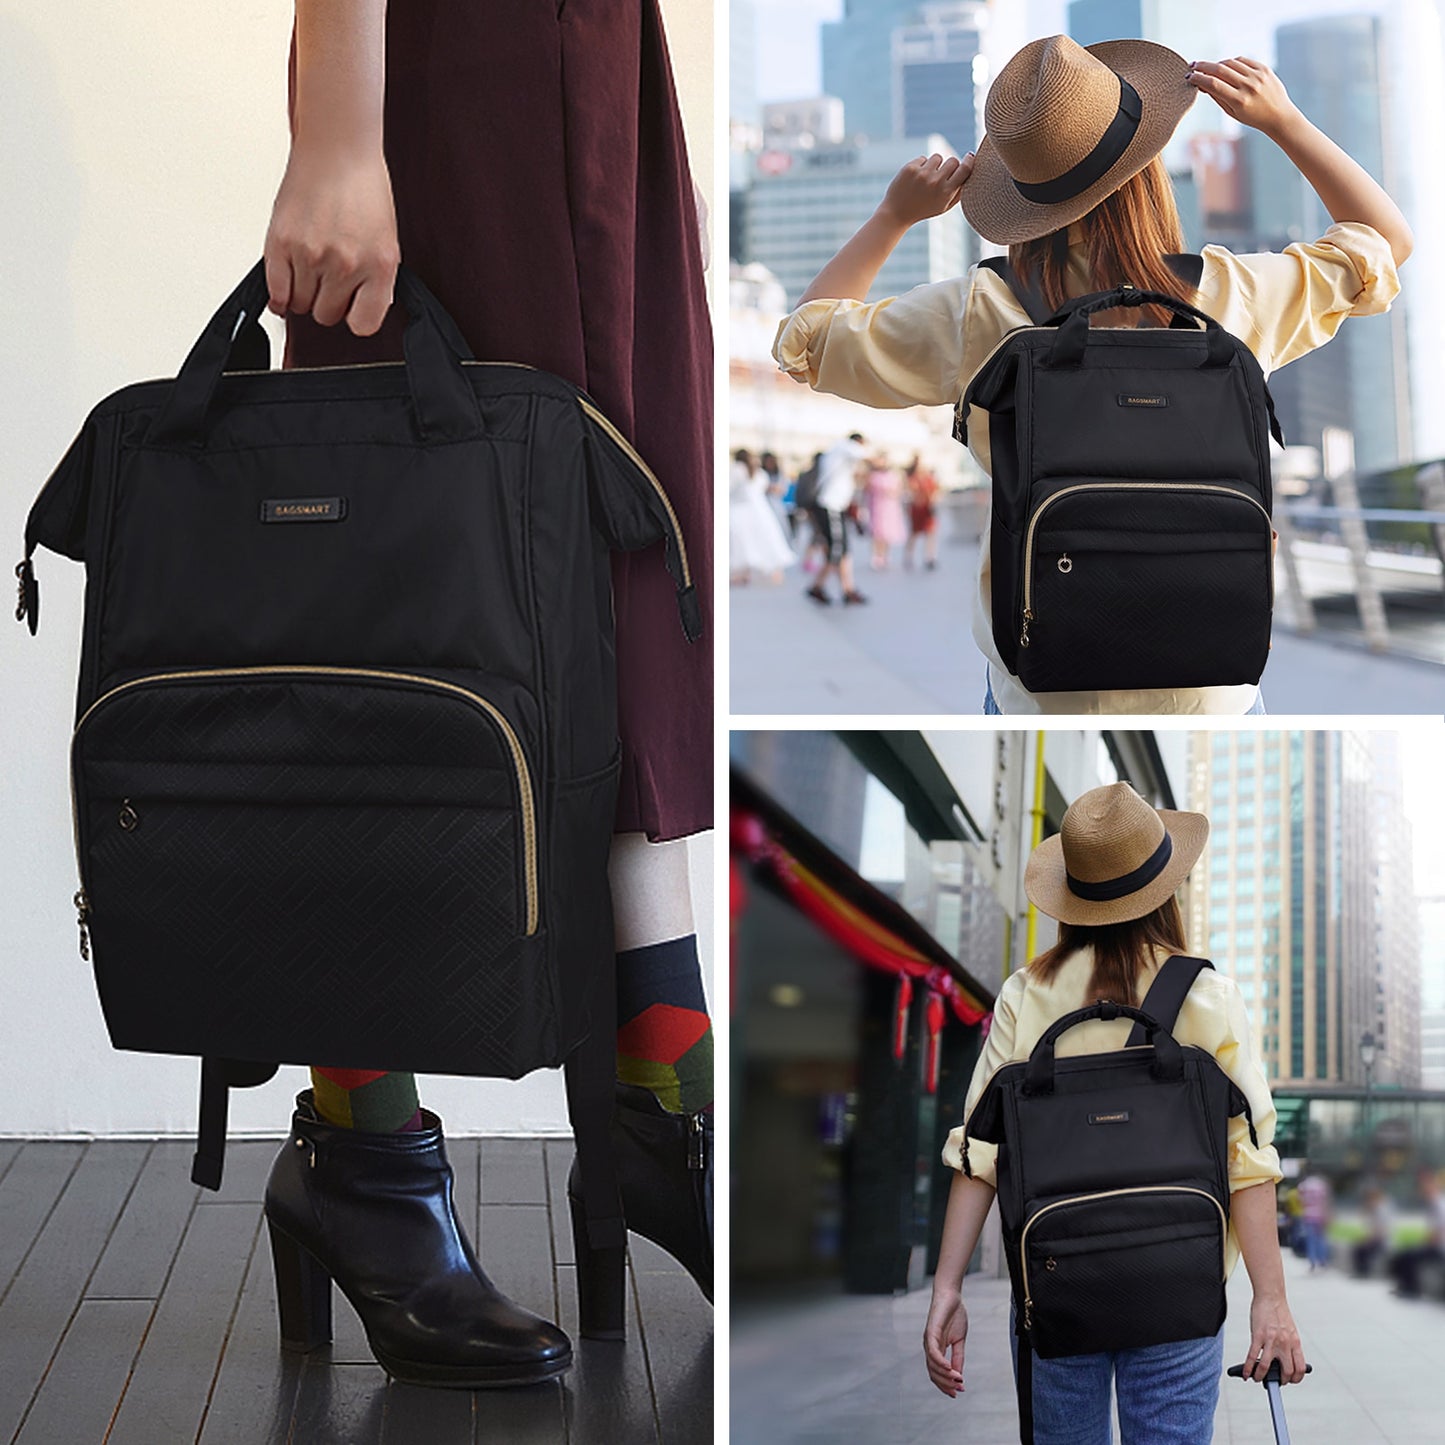 Laptop Backpacks for Women BAGSMART Travel Backpack 15.6 Inch Notebook Doctor Back pack for School College Work Business Trip